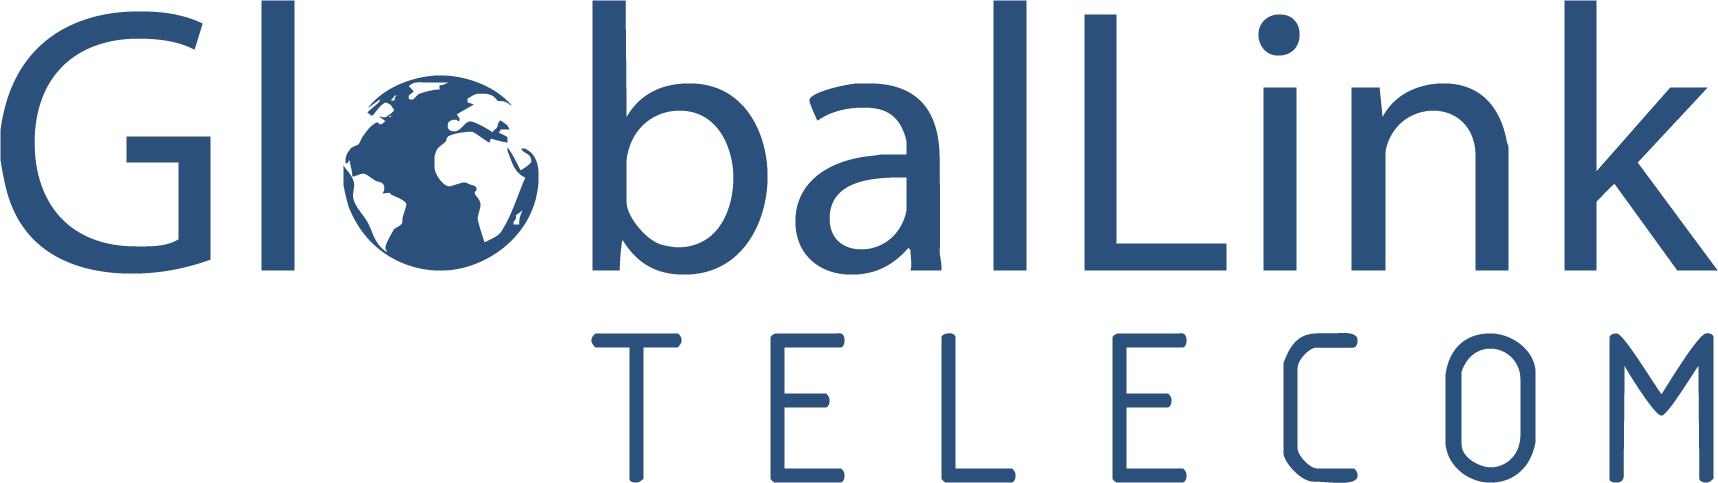 logo-GLOBAL.fw